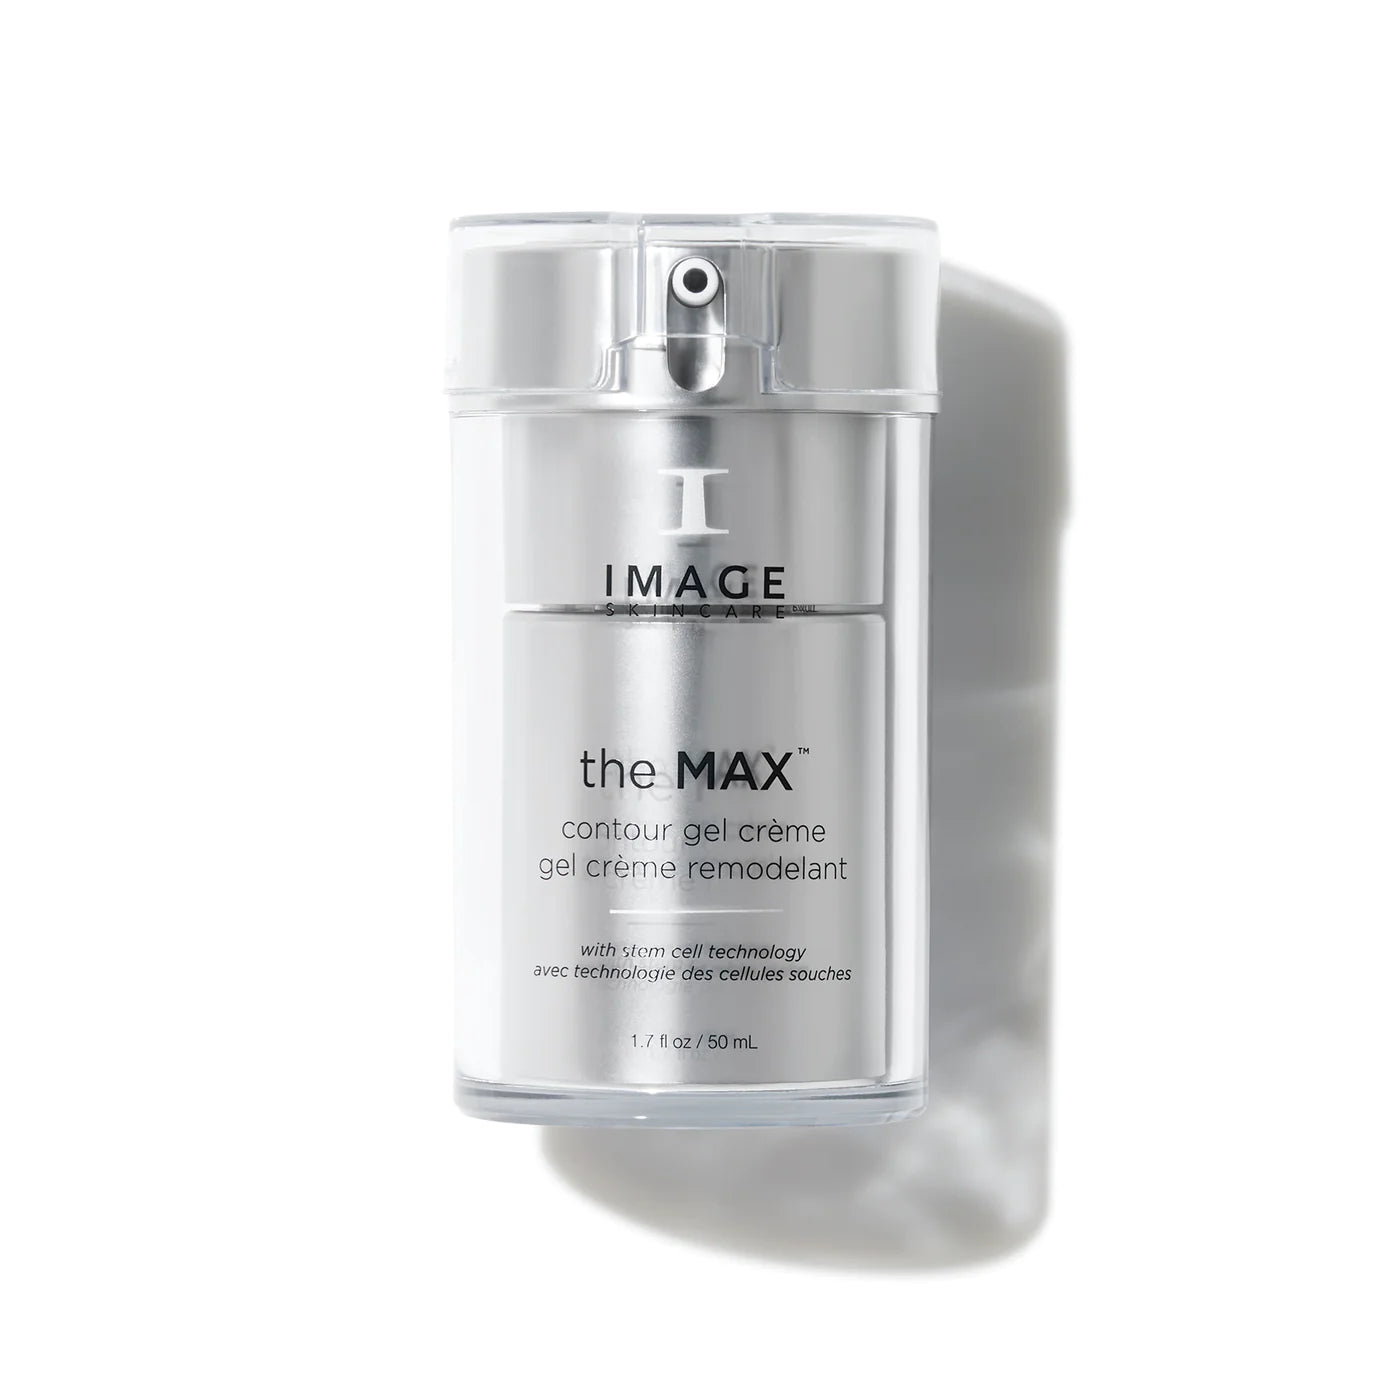 the MAX contour gel creme